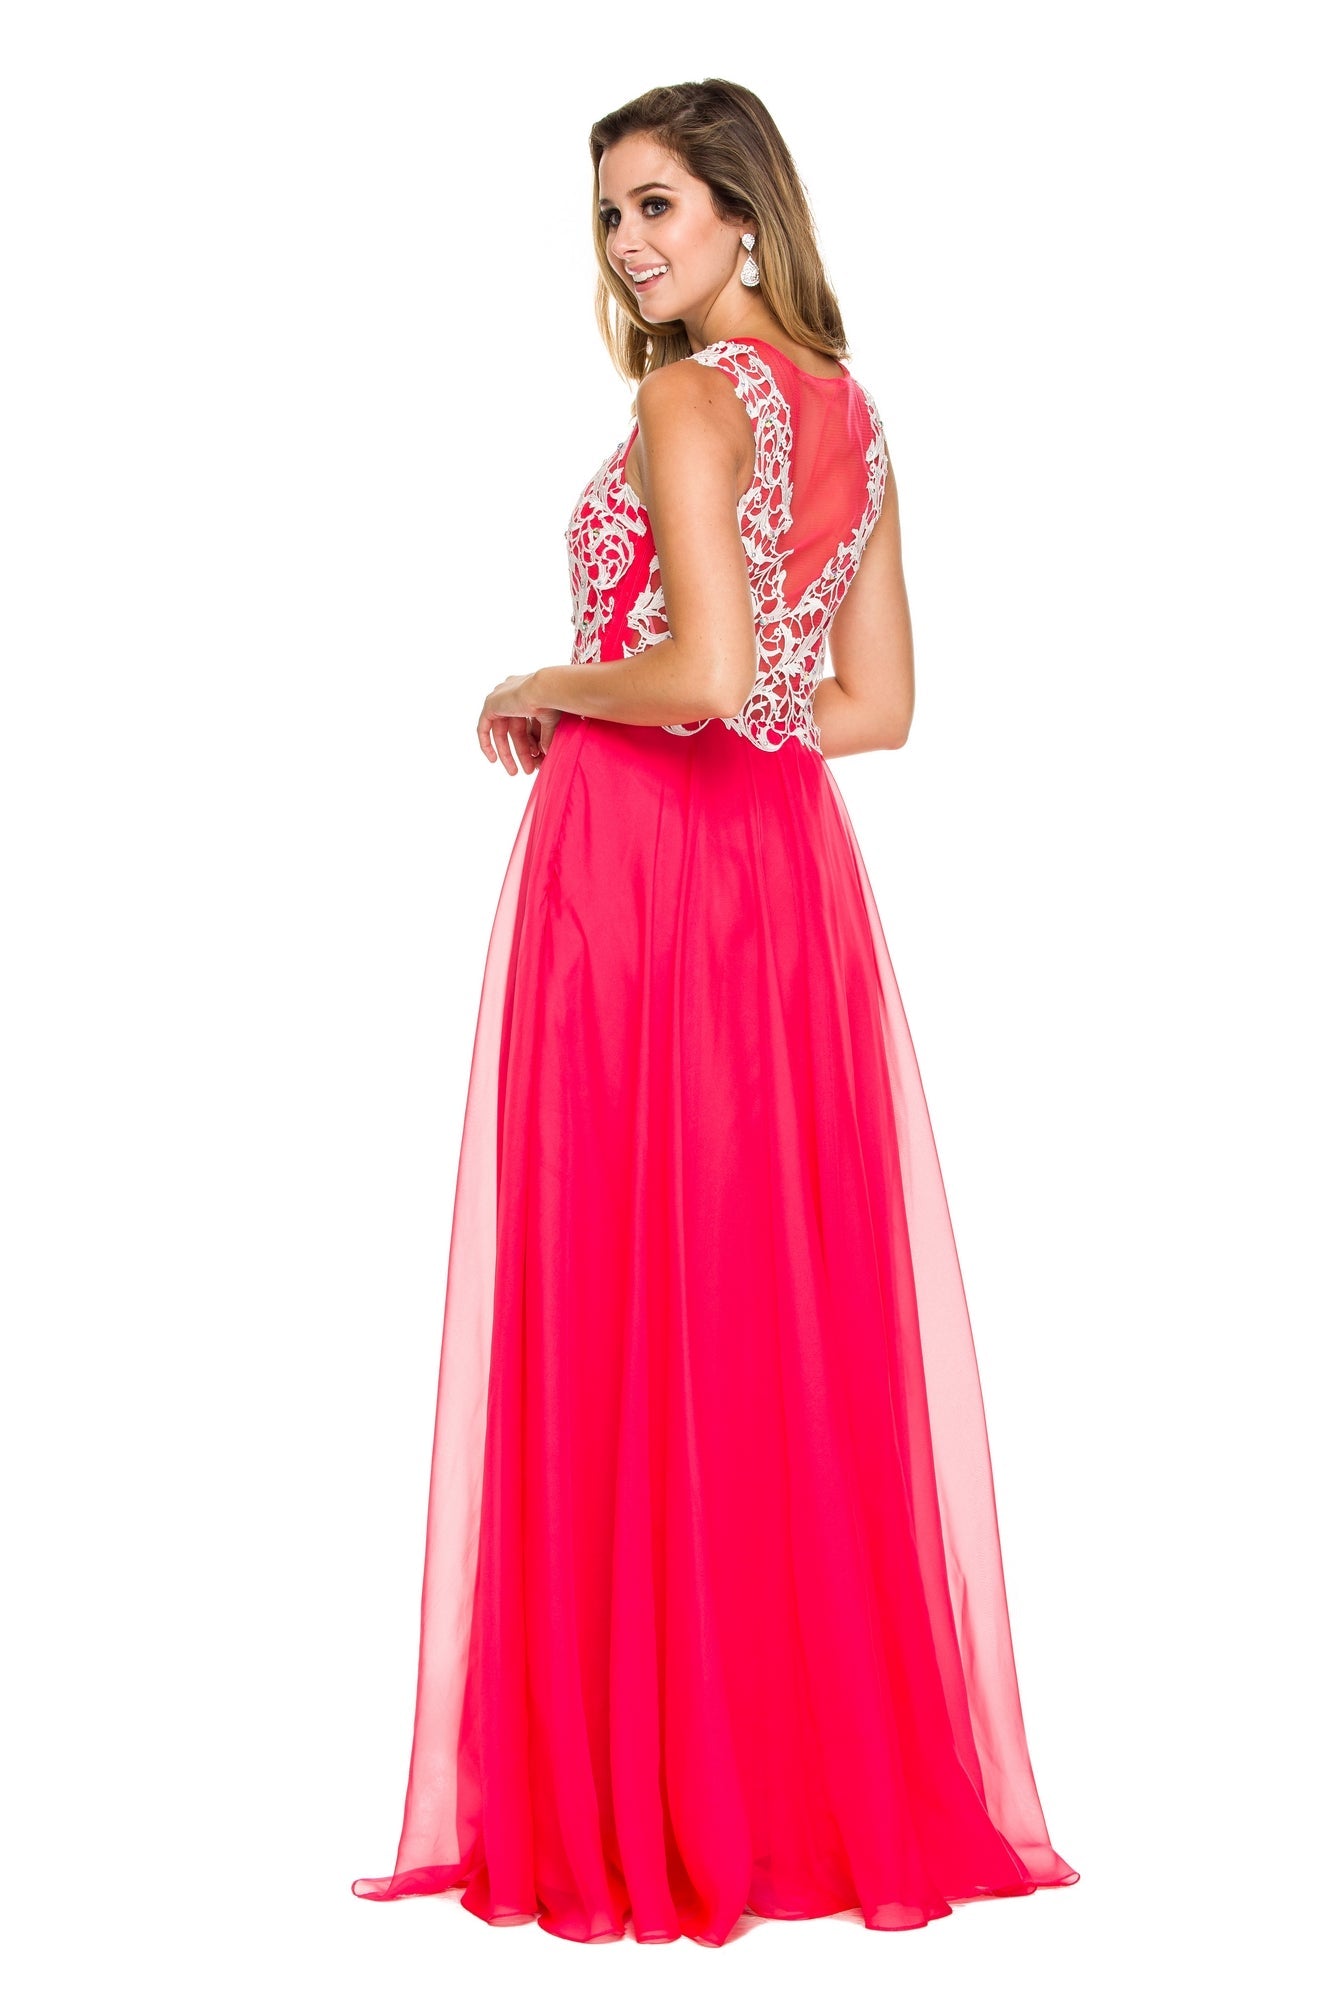  Lace-Illusion Sleeveless Bodice Long Prom Dress